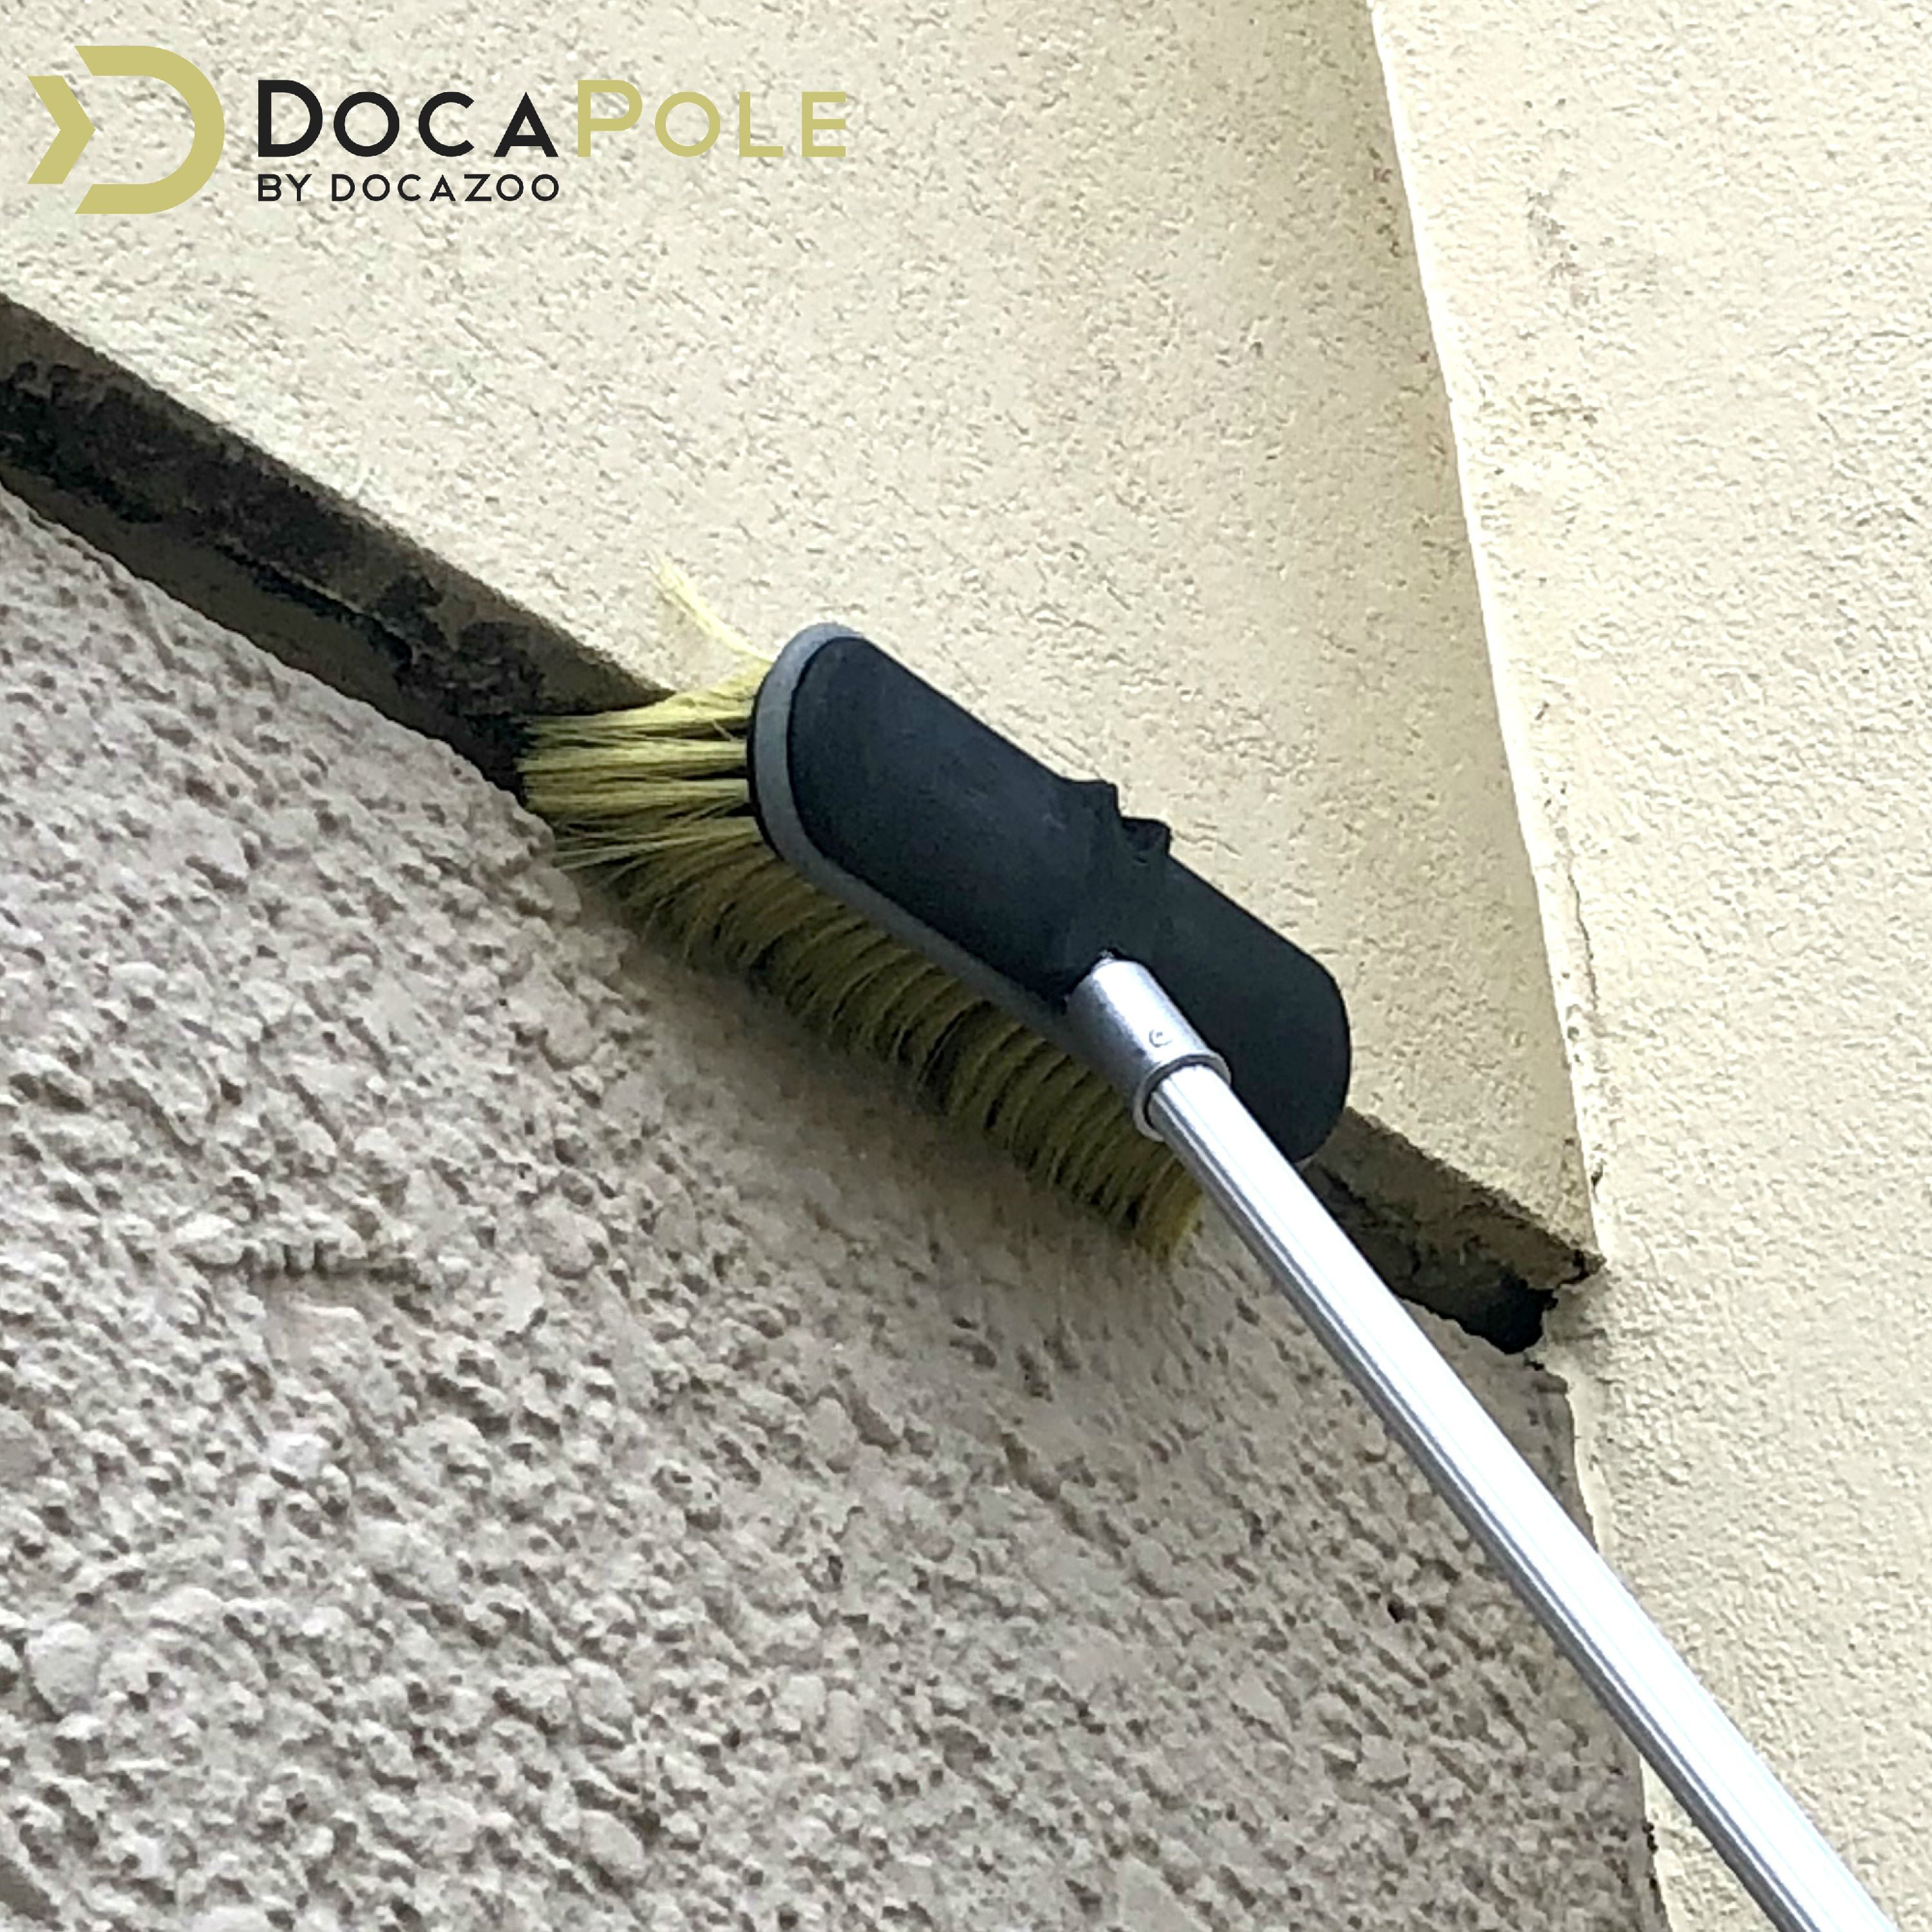 DocaPole Hard Bristle Deck Brush and Bi-Level Scrub Brush Extension Pole  Attachment (11)  Long Handle Scrub Brush and Deck Brush for Deck, House  Siding, Brick, Concrete and more (Pole Not Included) 